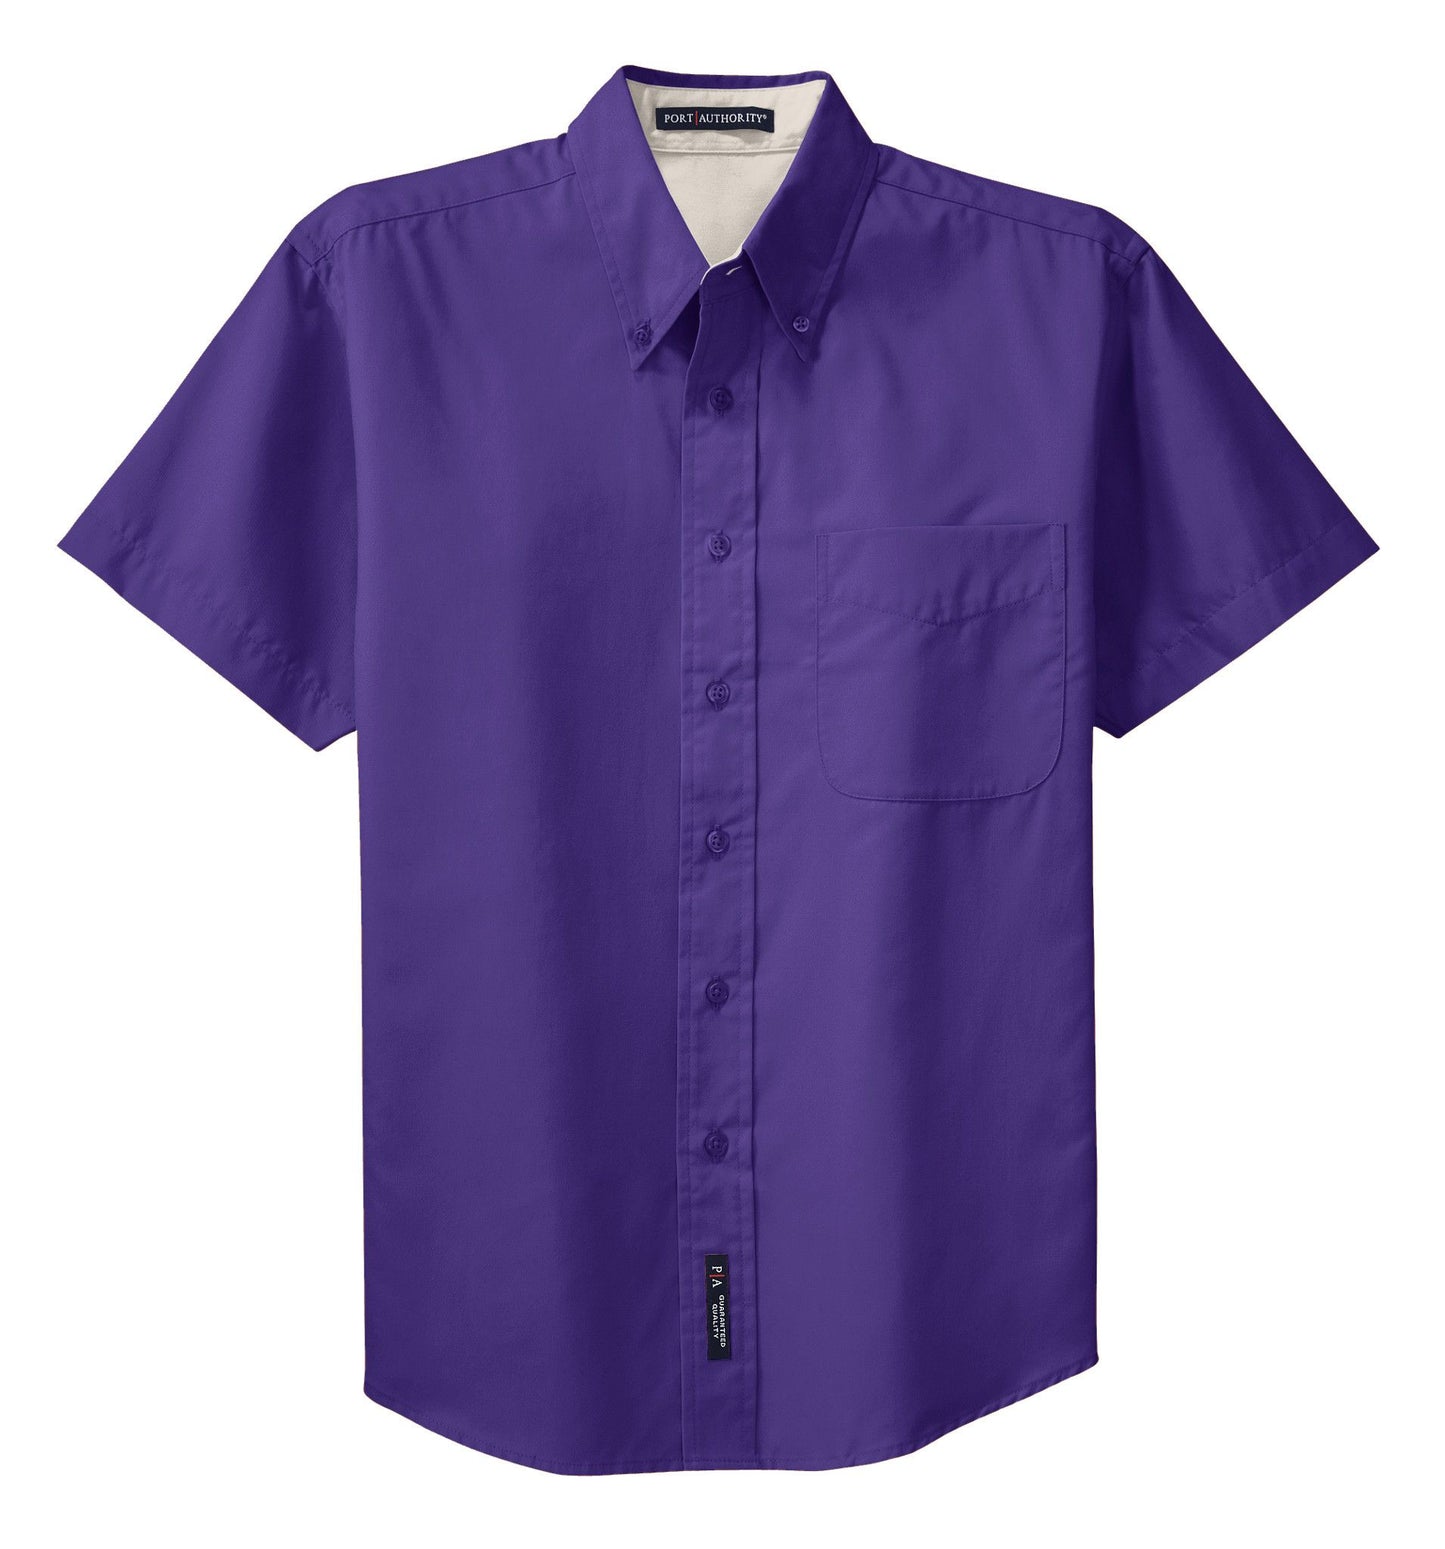 Port Authority® Short Sleeve Easy Care Shirt (Dark Colors) S508